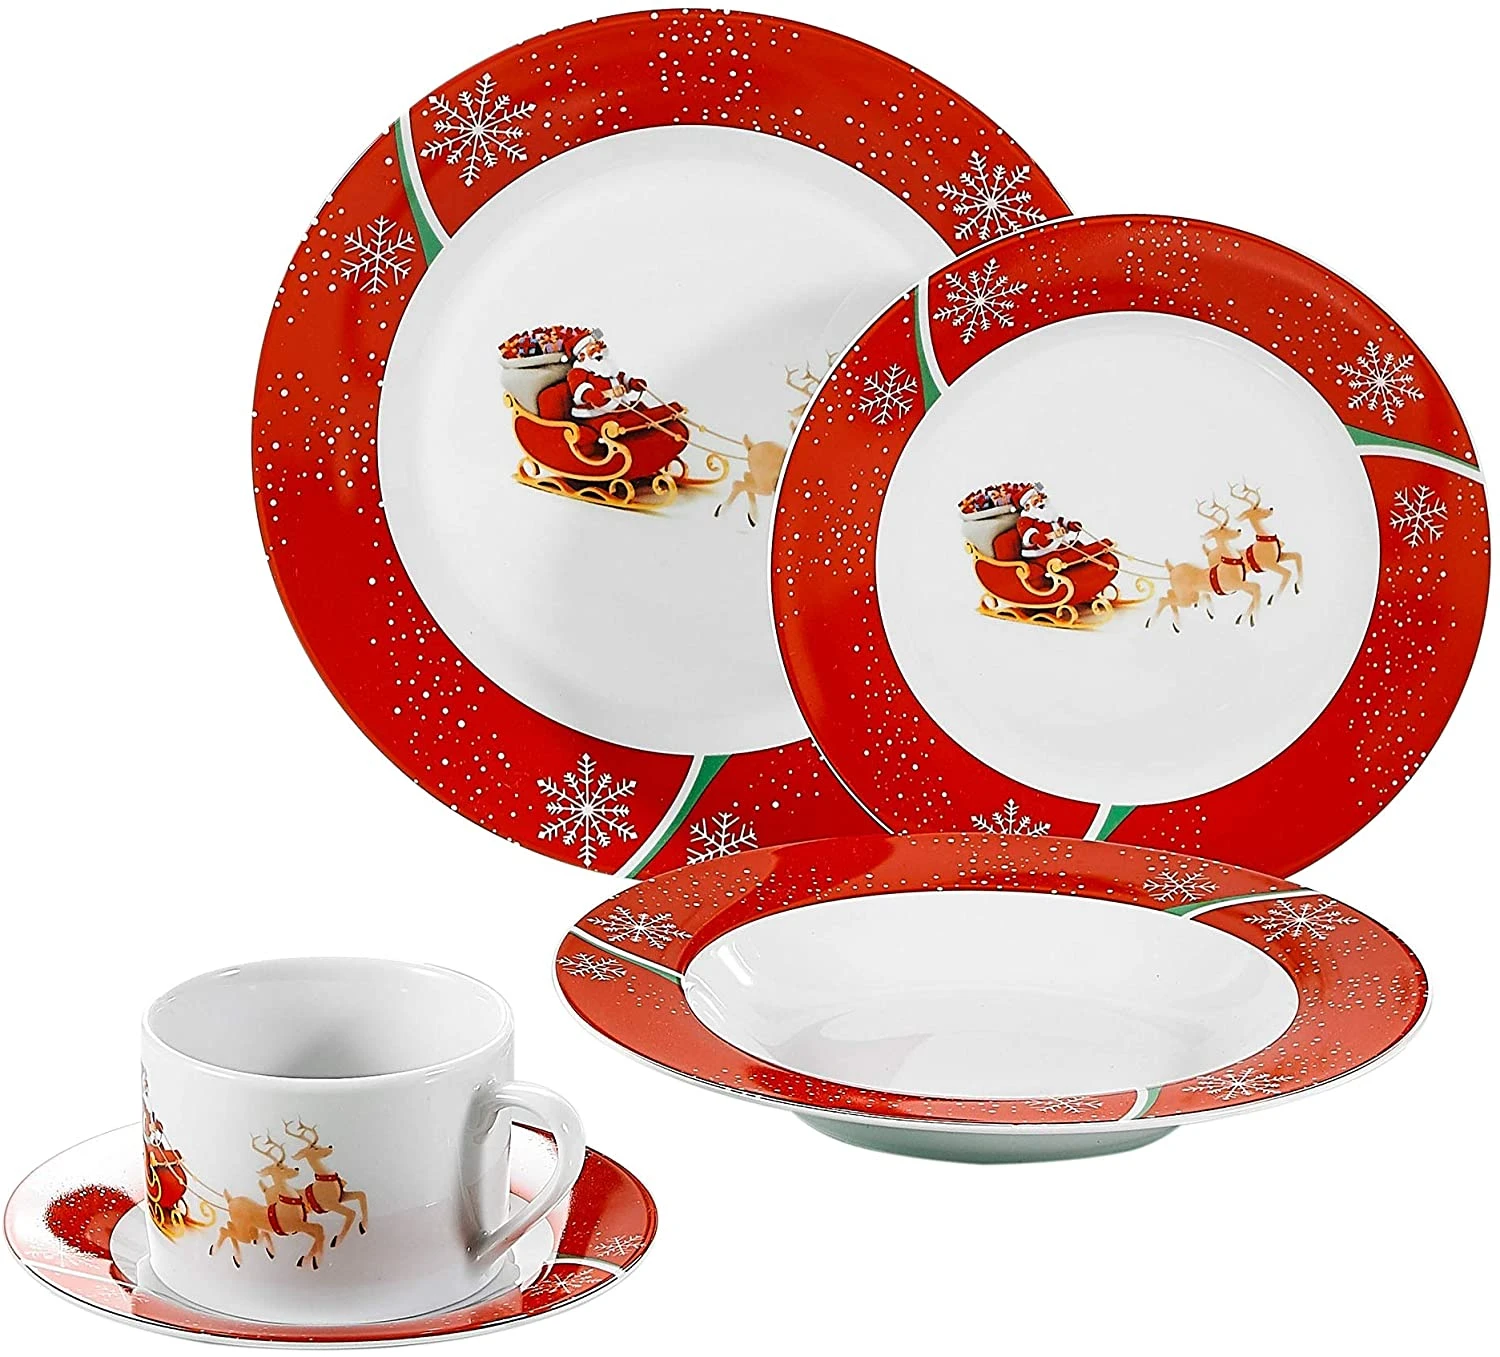 Wholesale Christmas deer design decorative ceramic plates 30 pcs Christmas dinnerware sets